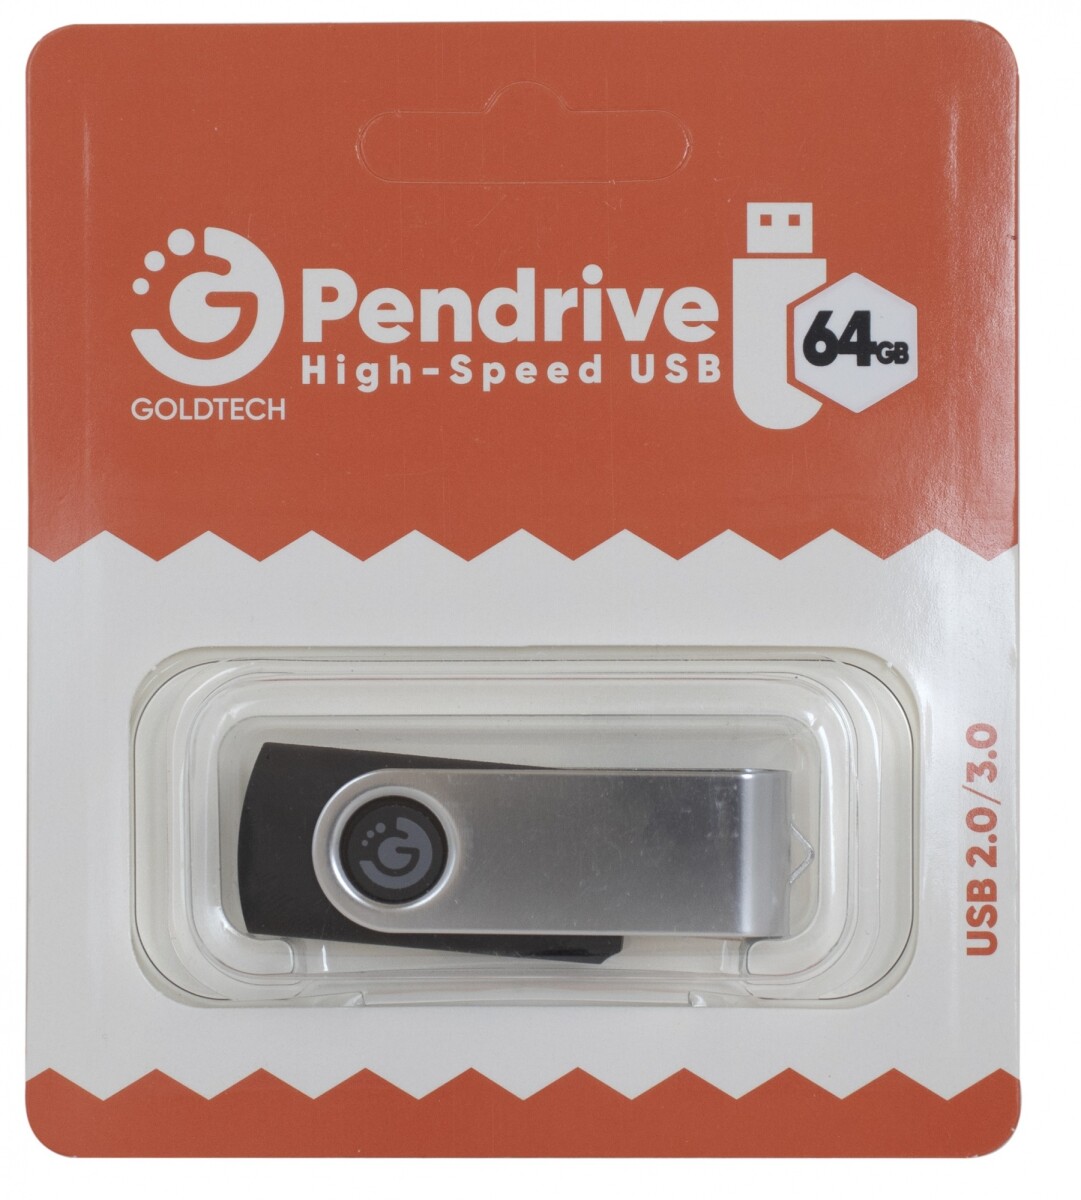 Pendrive Goldtech 64 GB - 001 